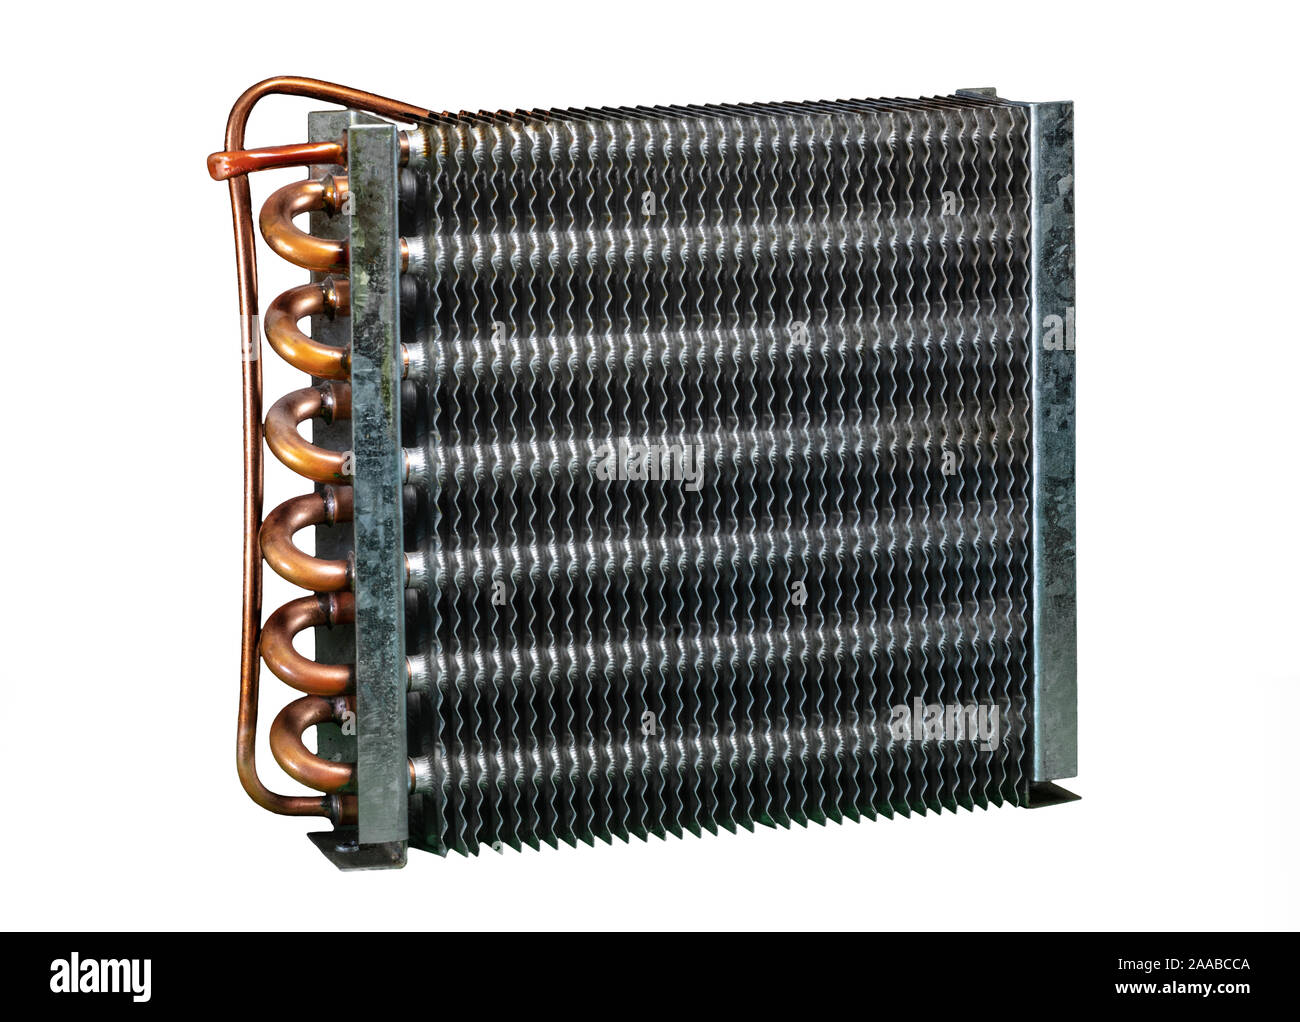 Refrigerator Compressor Condenser Unit for Heat Dissipation Stock Photo